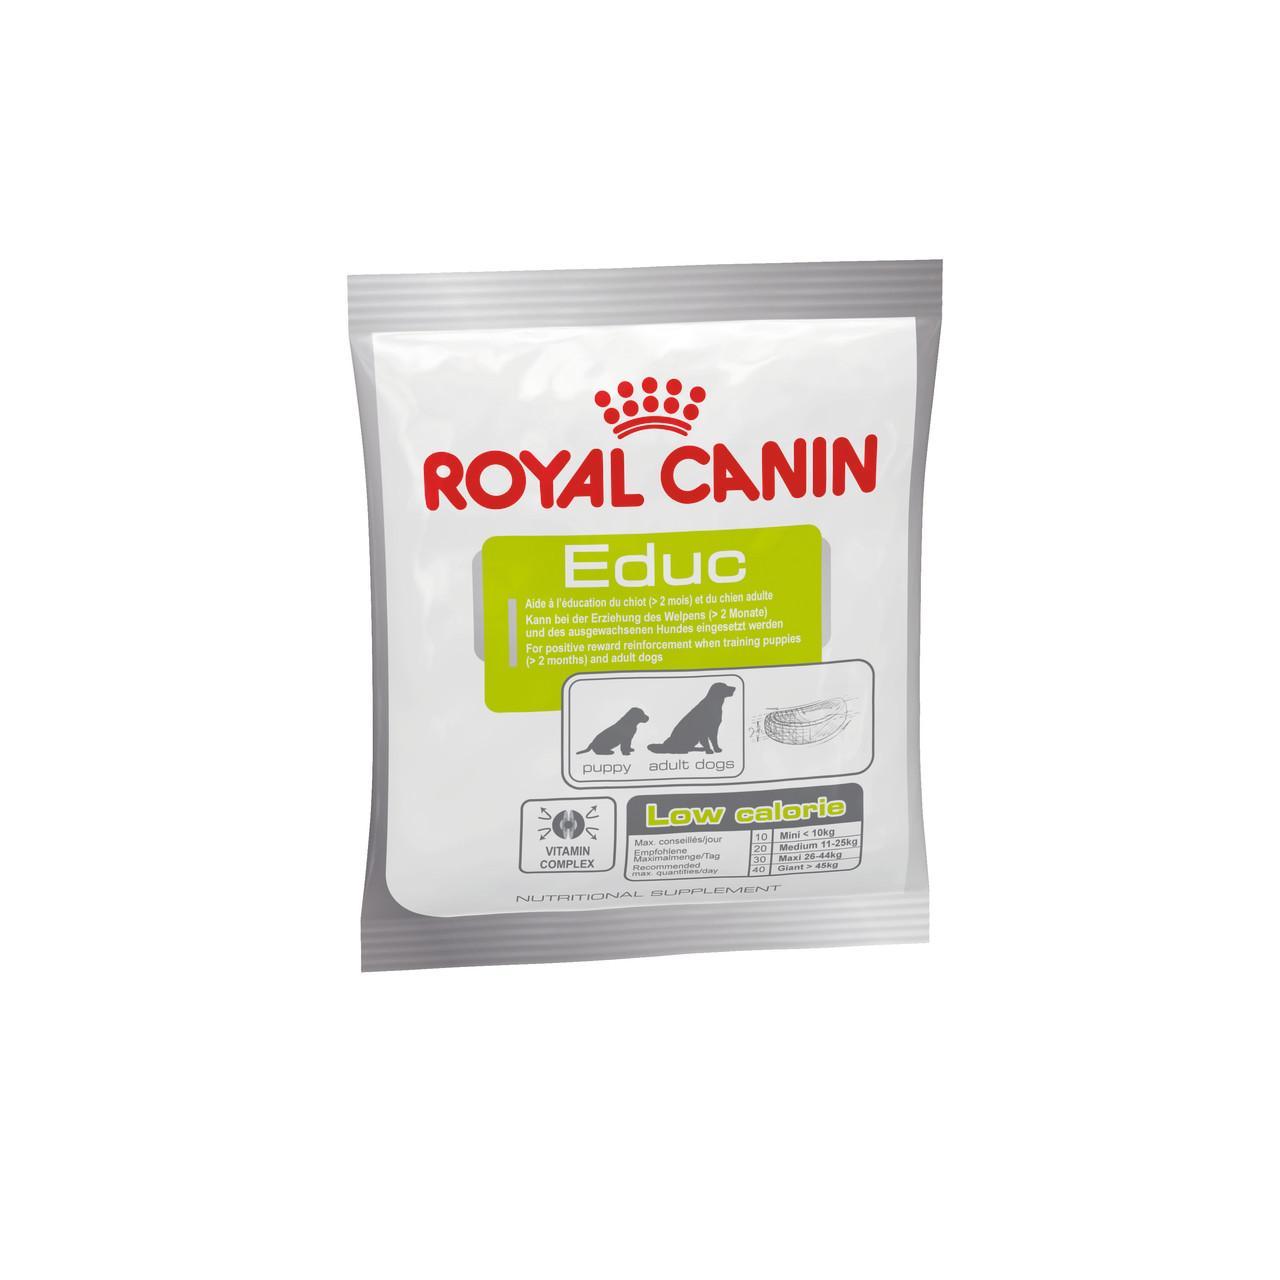 An image of Royal Canin Educ Treats